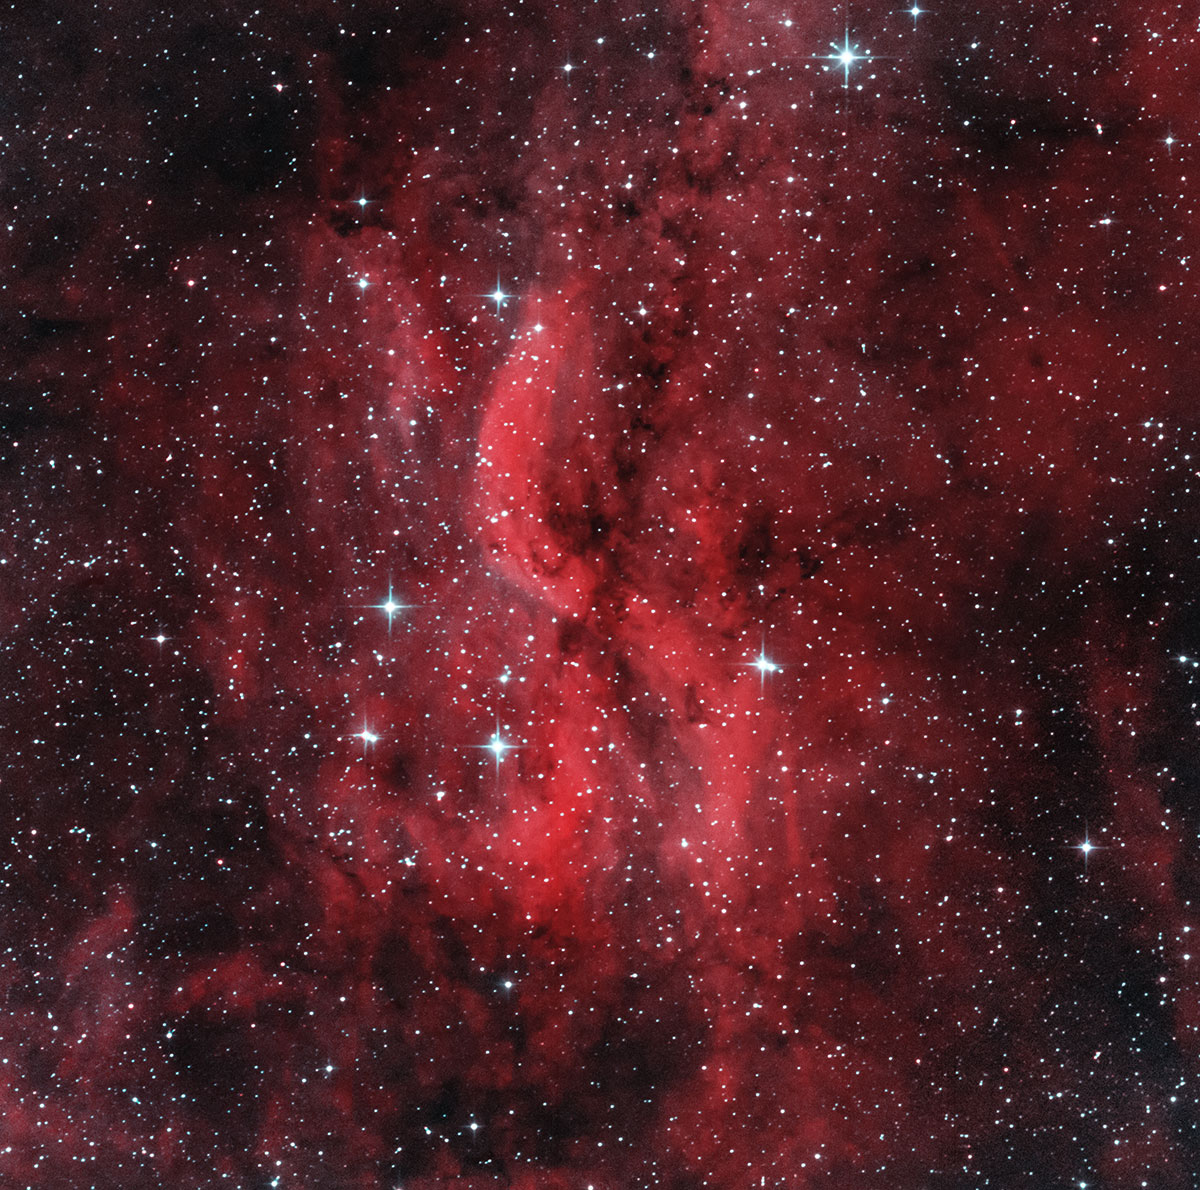 The Propeller Nebula